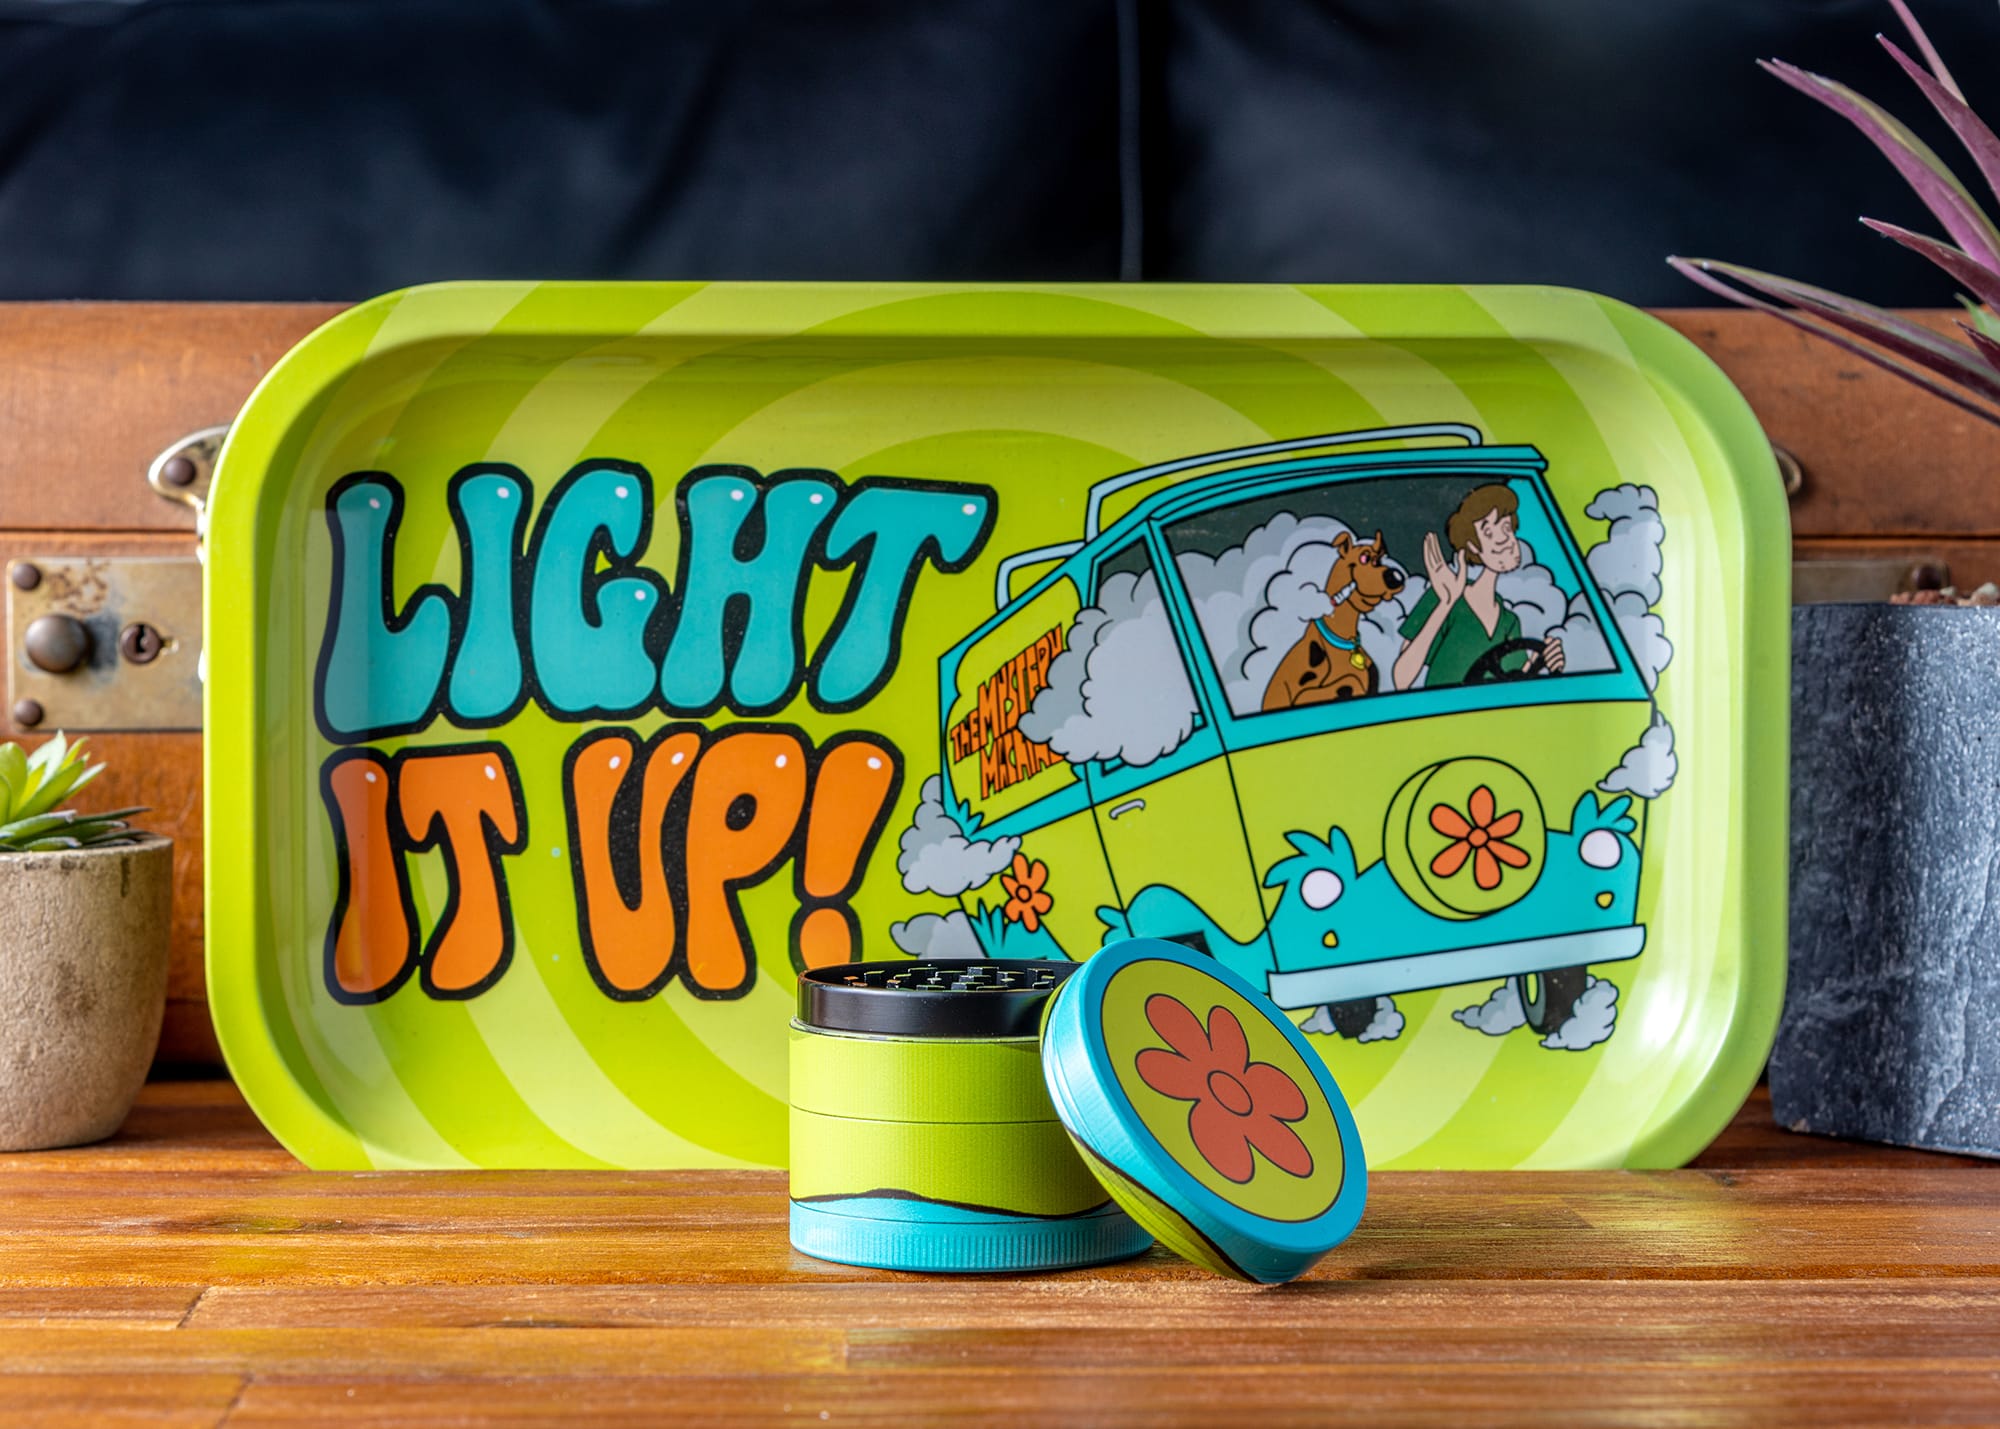 Puff Plate Light It Up  Scooby  Matching Tray & Grinder Set - Smoke Cargo